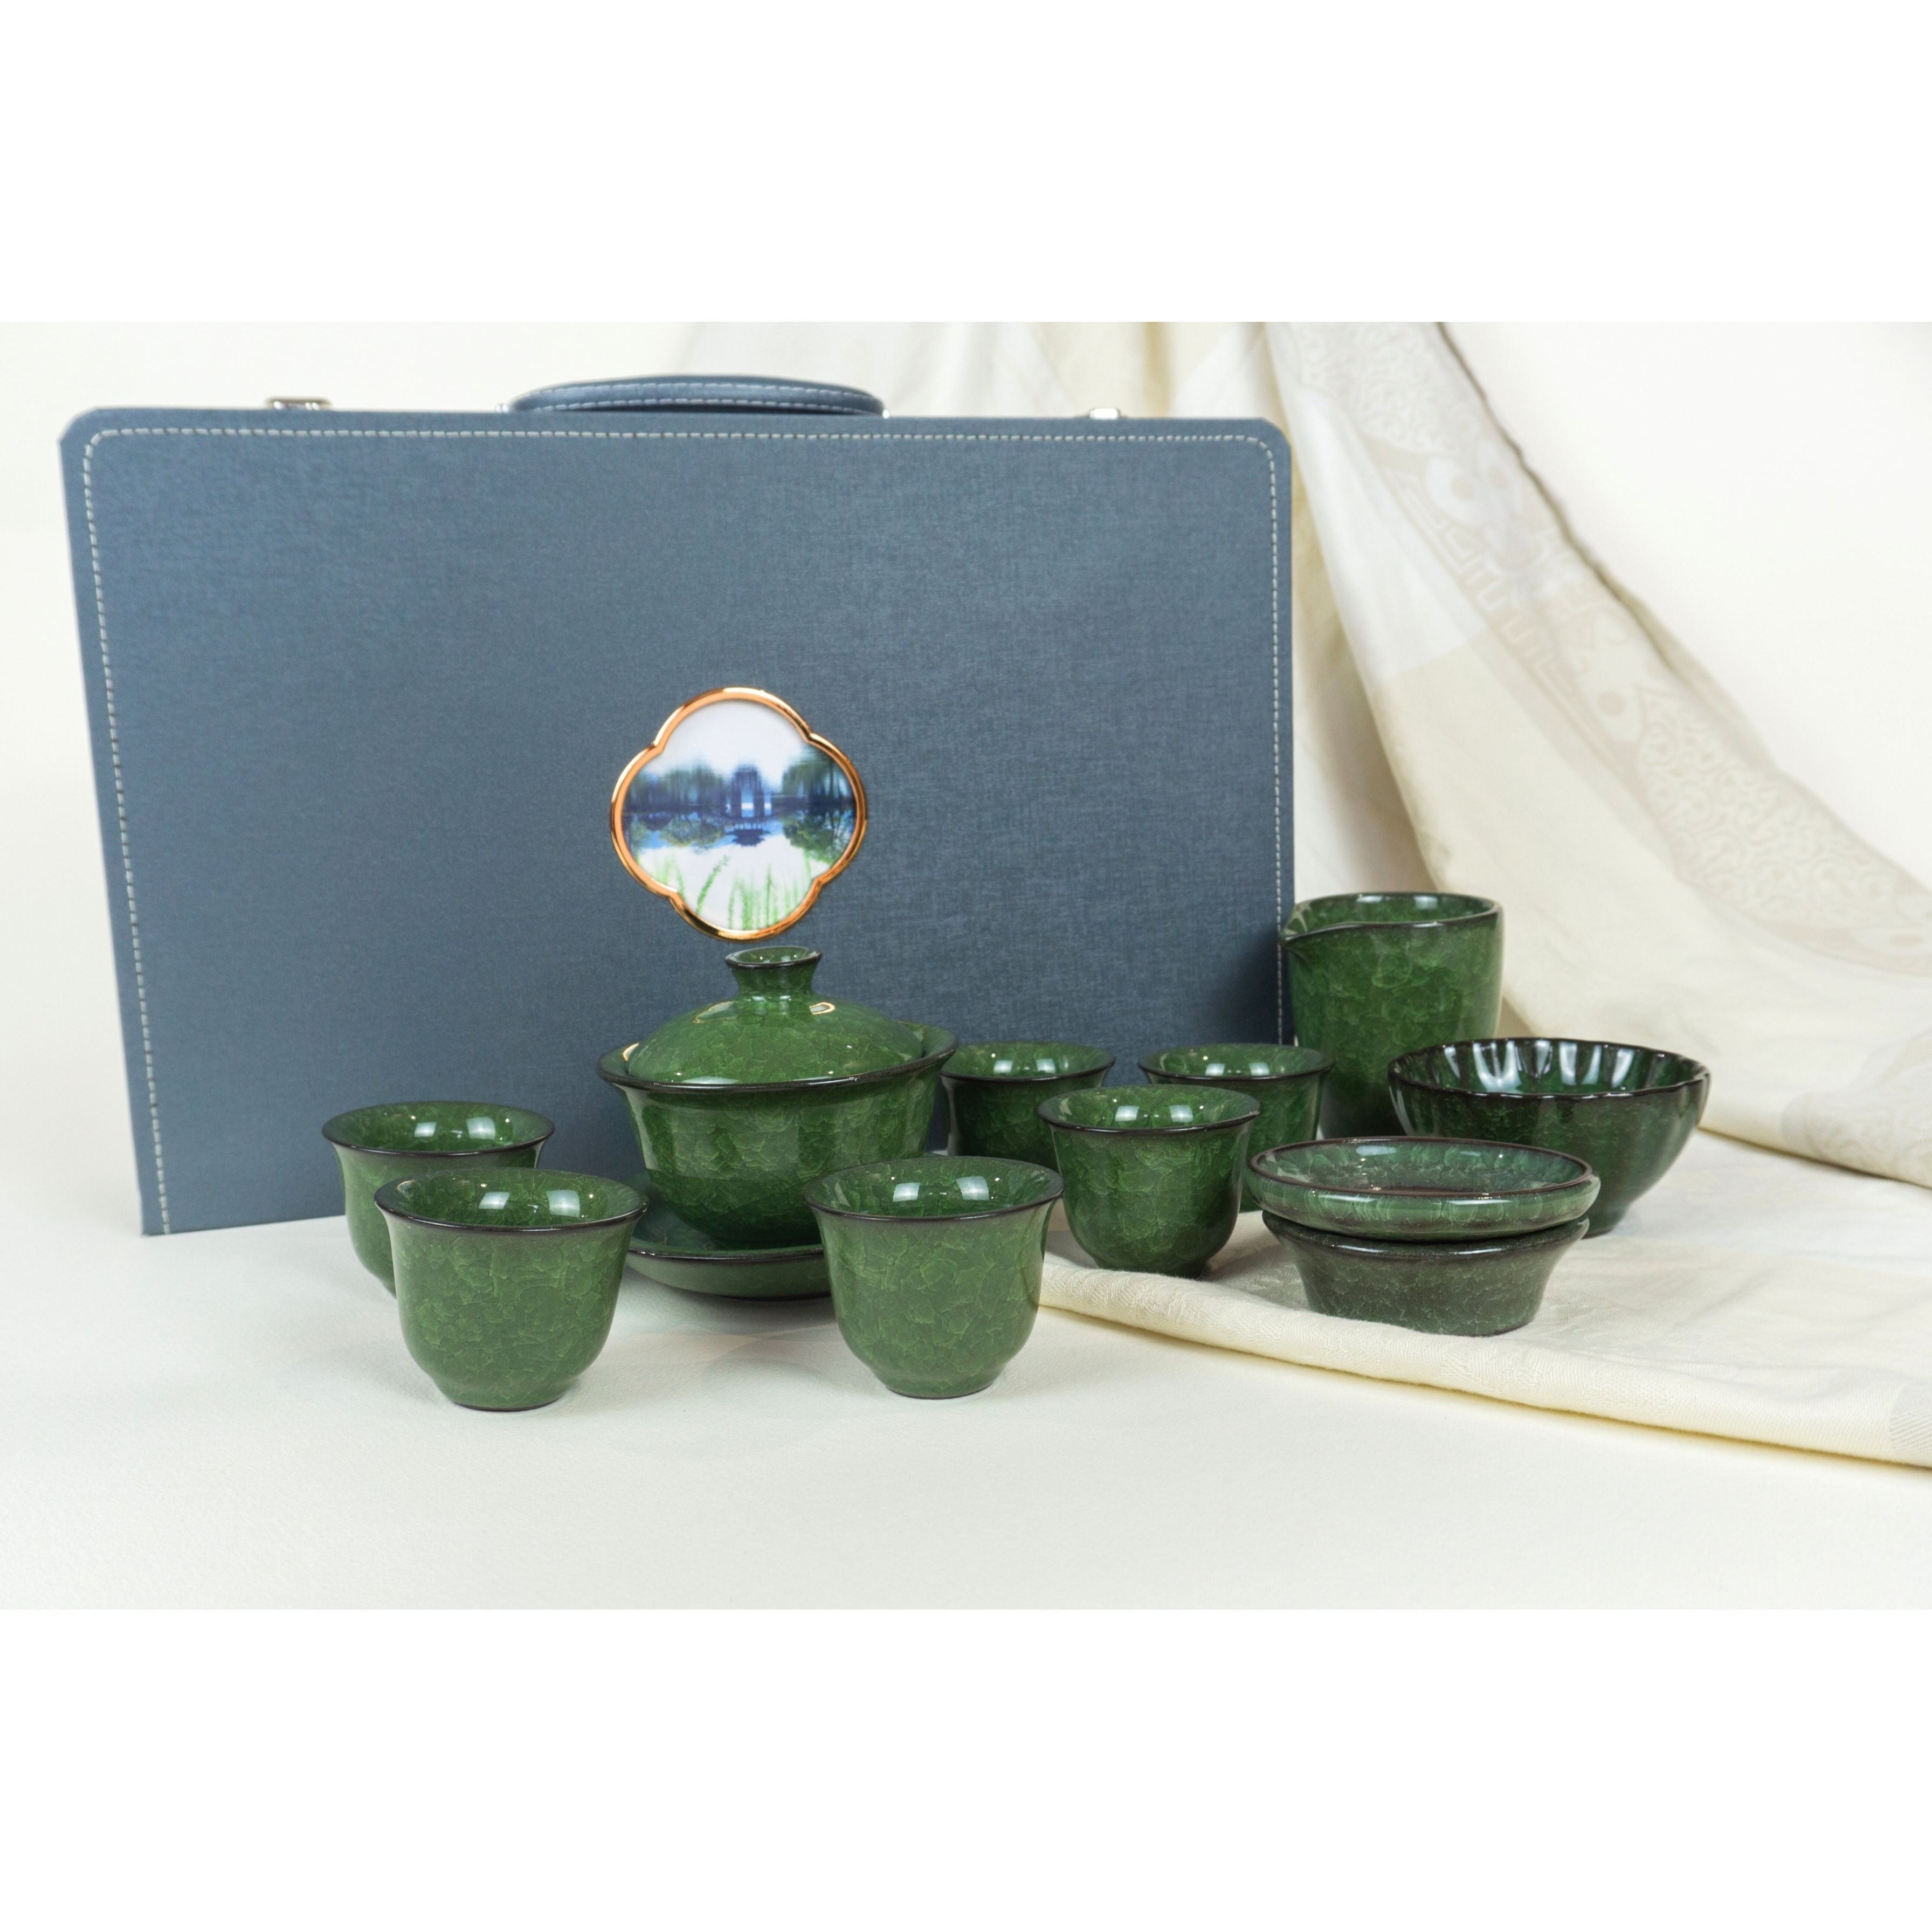 Tea Ceremony Set, Green Ice Glaze Porcelain, Carrying Case